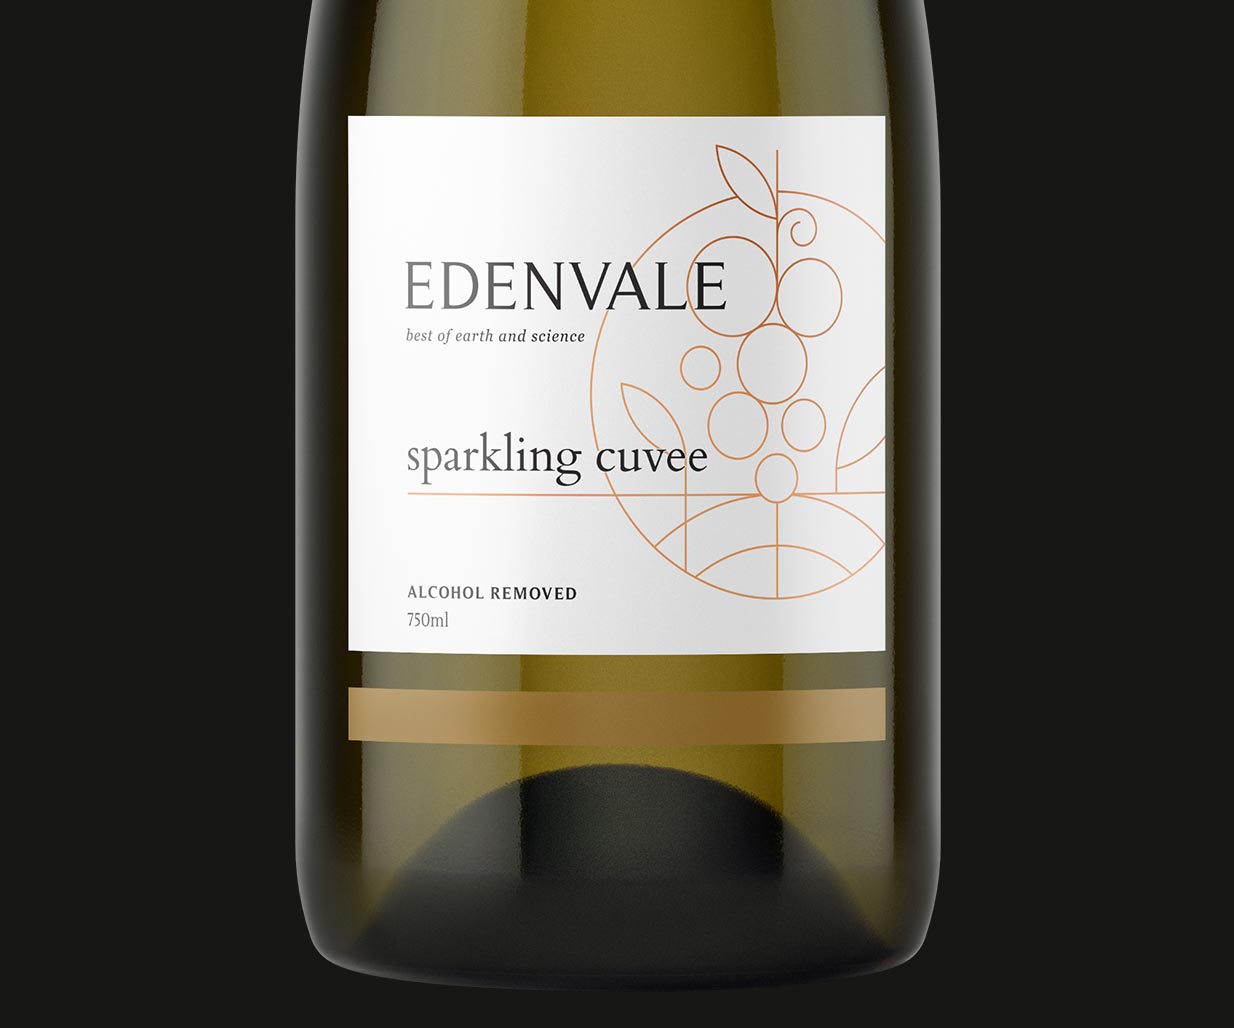 Australian wine label designers, Percept, create branding and packaging design for Edenvale, project image I